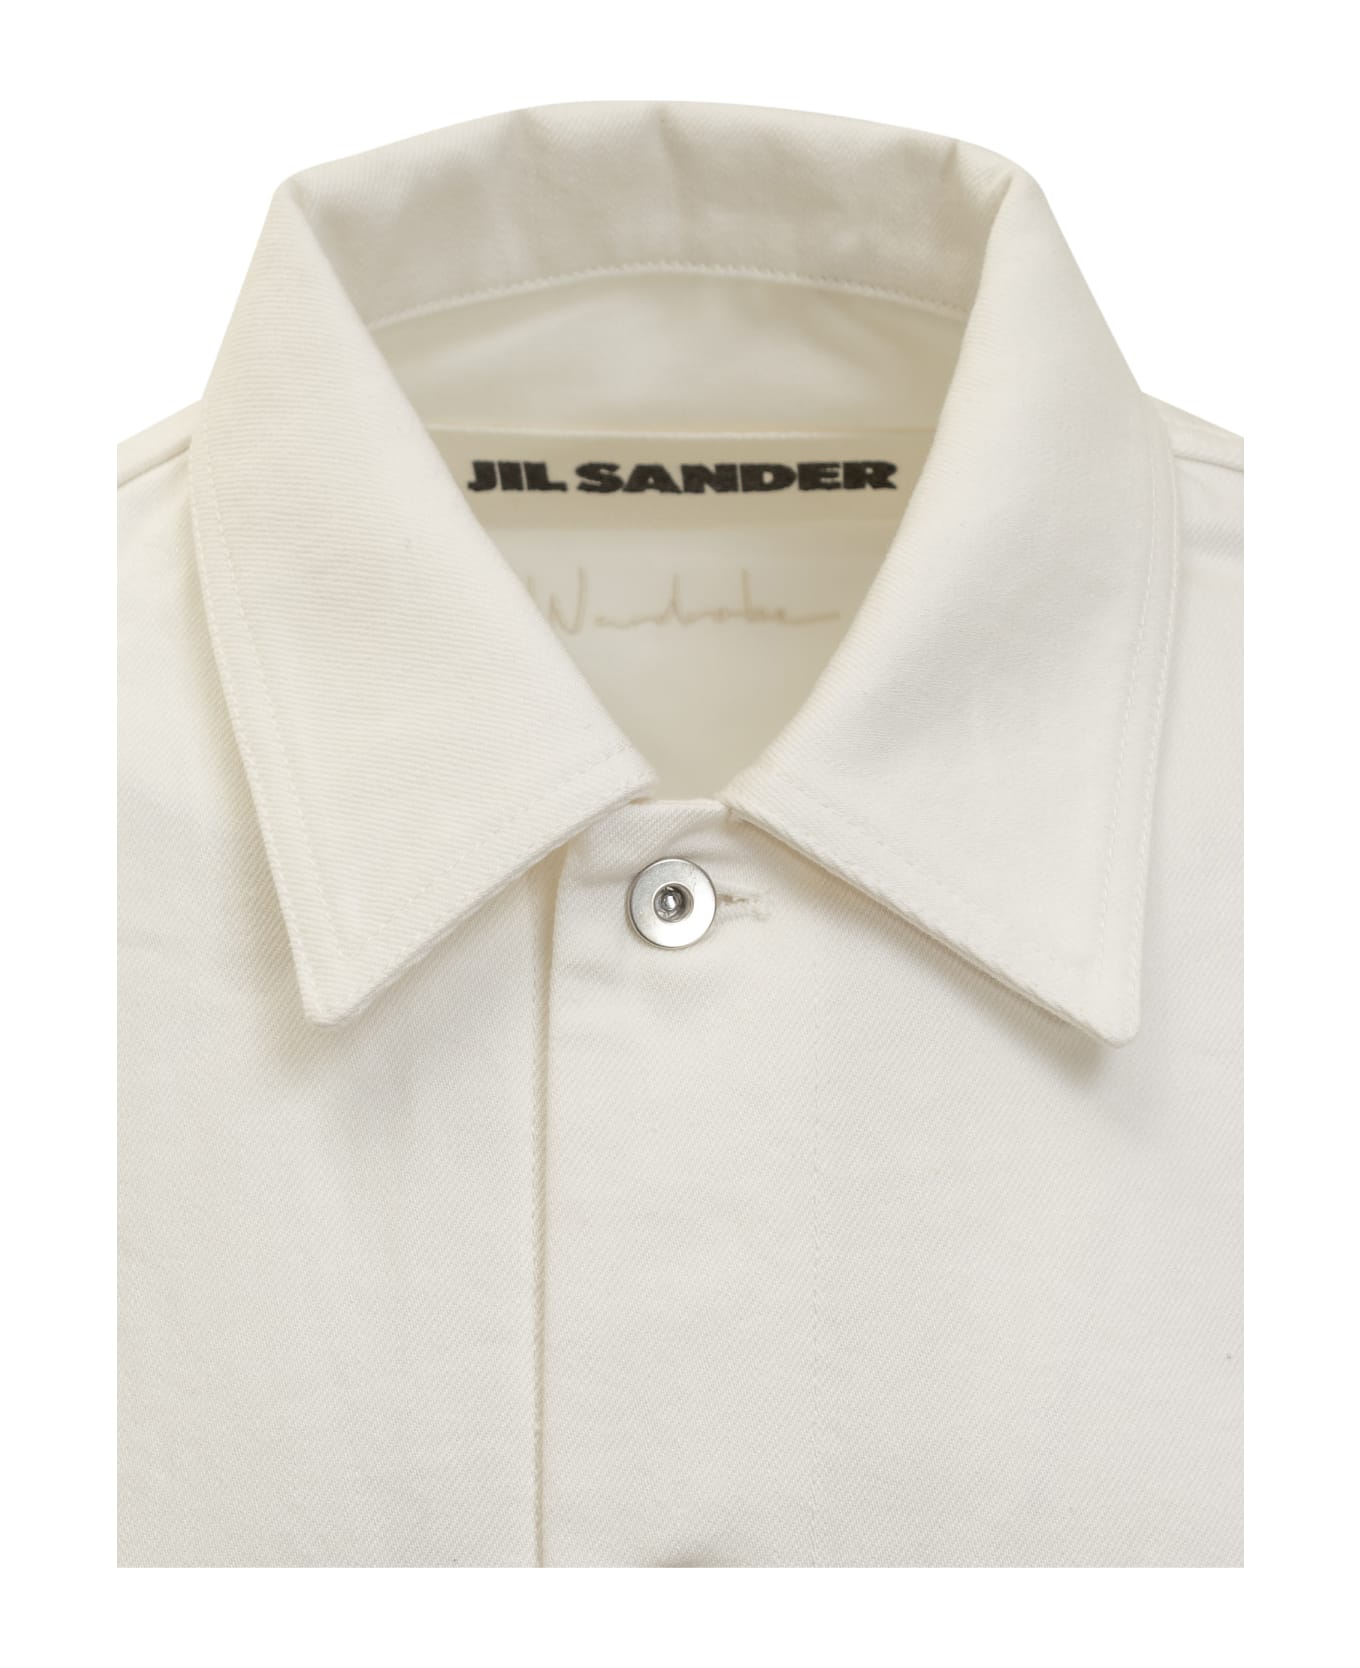 Jil Sander 01 Shirt - PORCELAIN シャツ